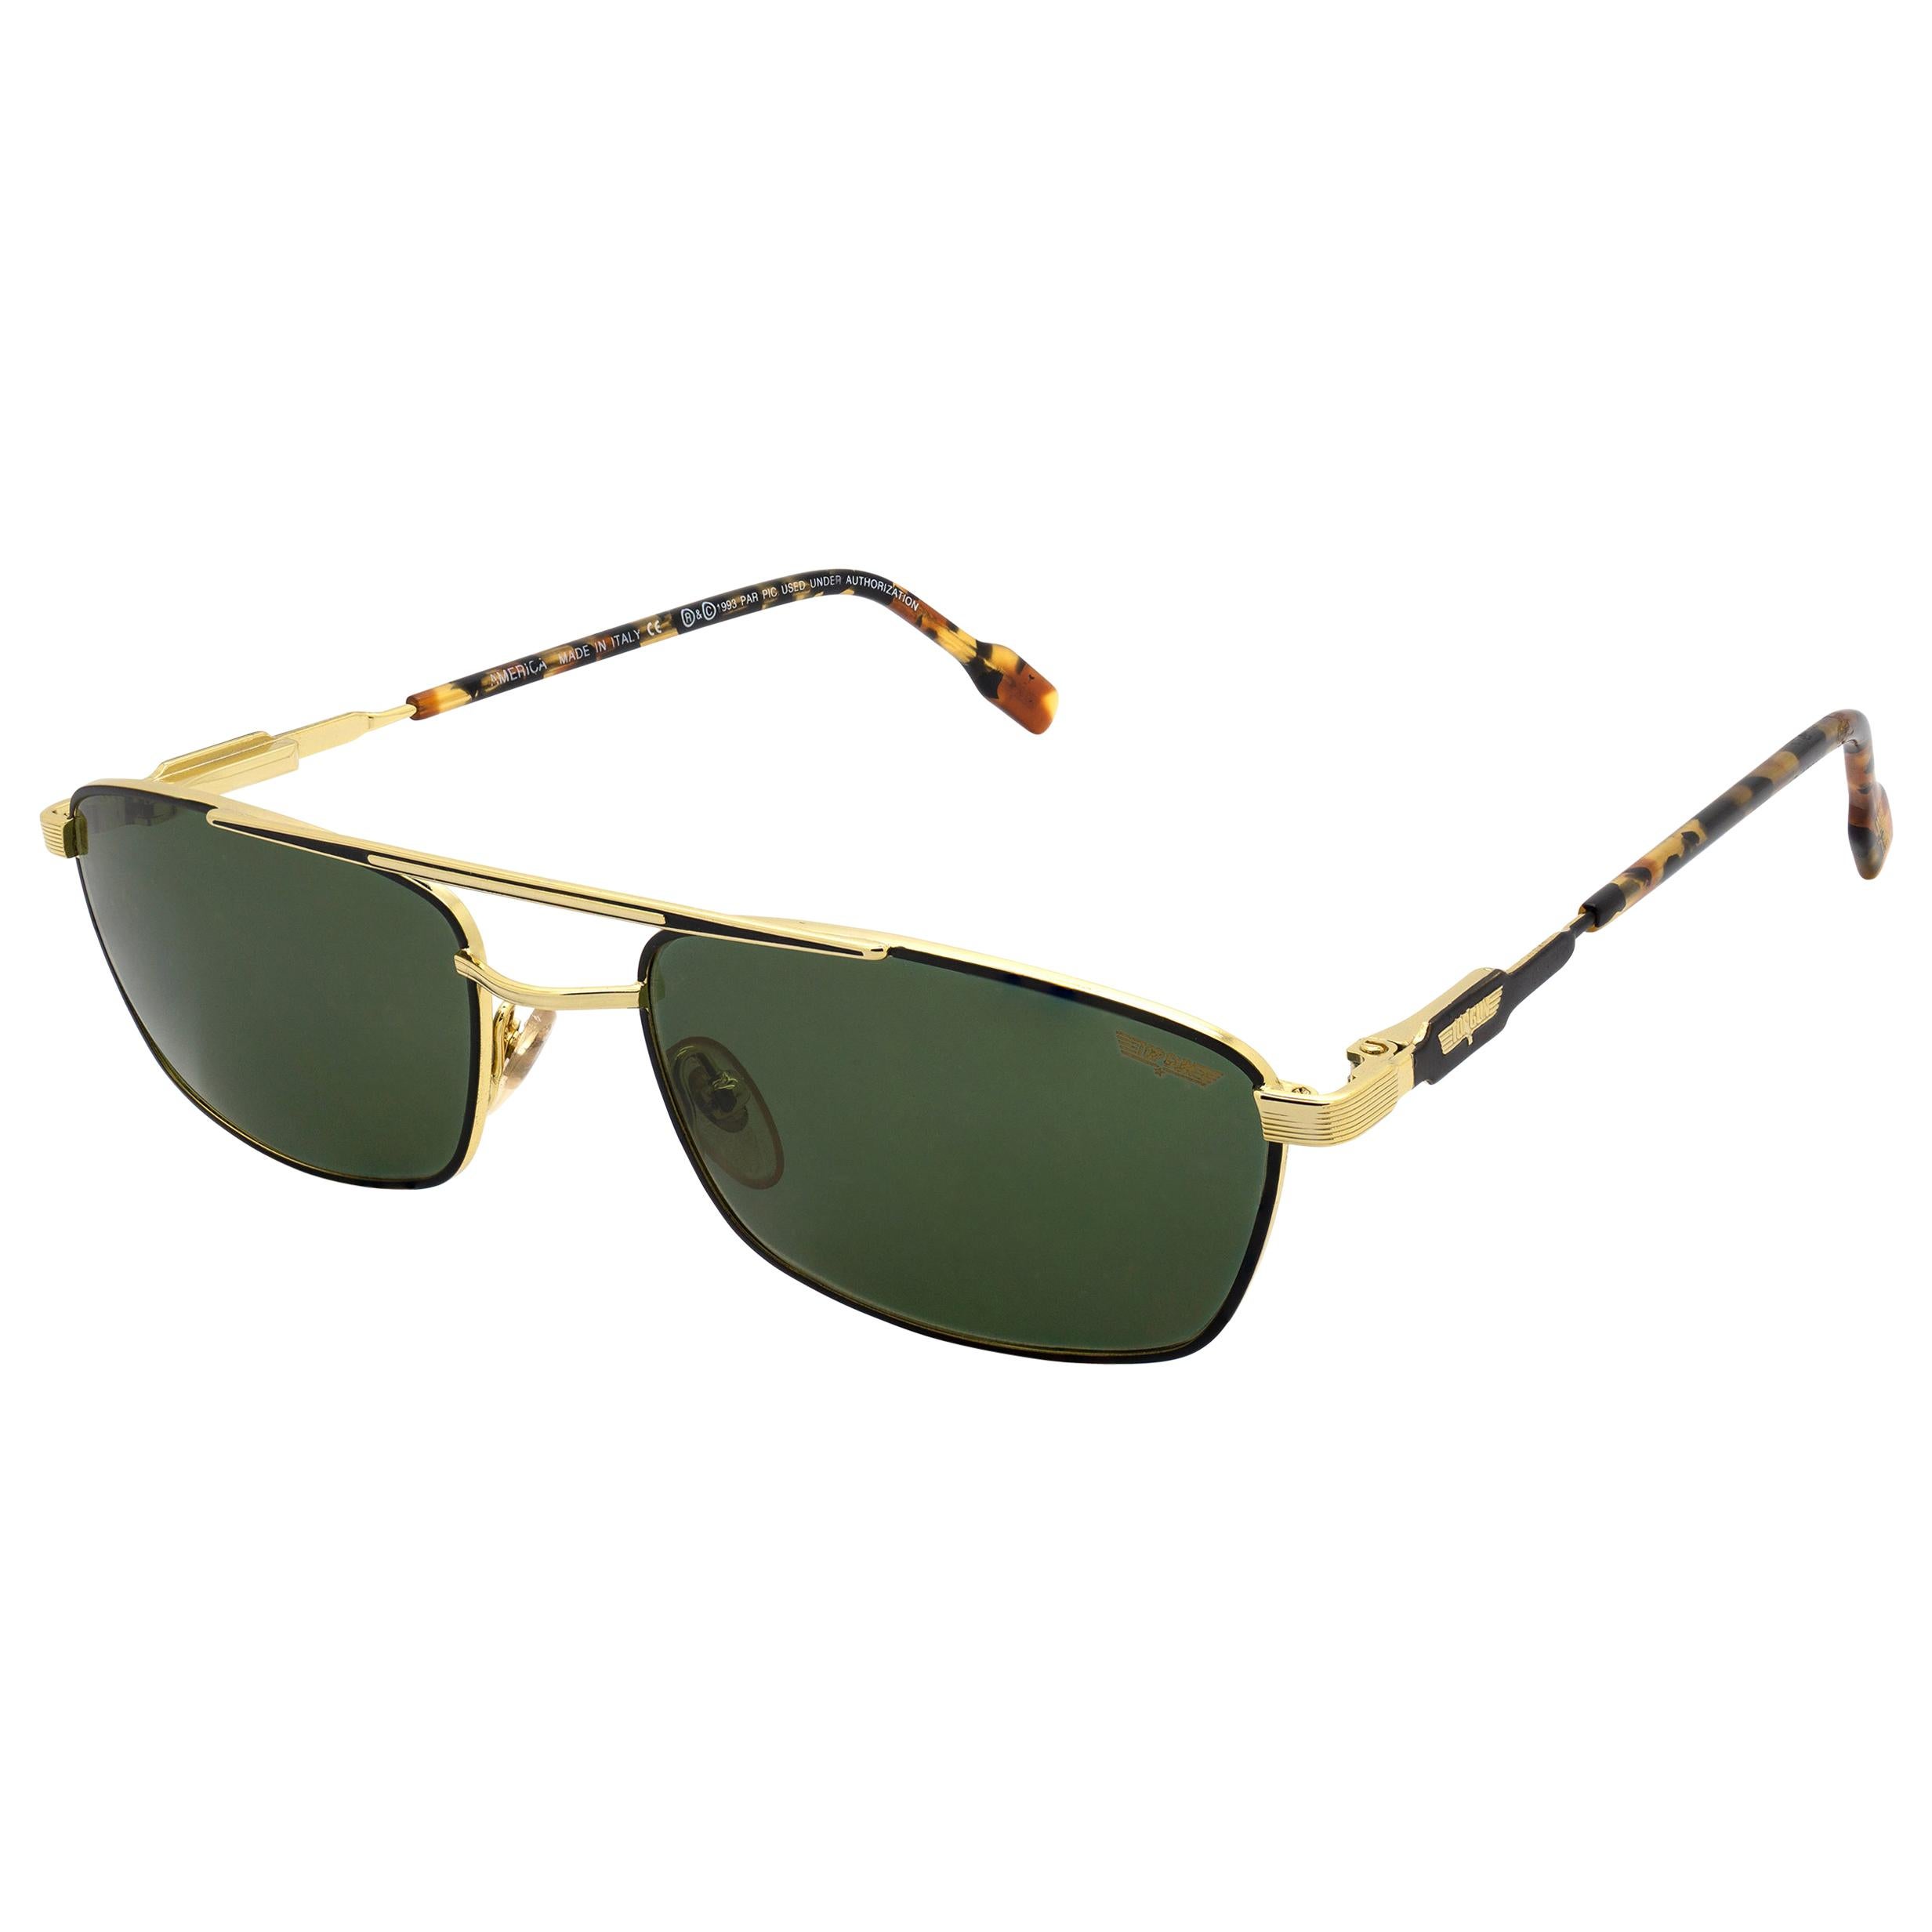 Top Gun aviator vintage sunglasses, Italy 90s For Sale